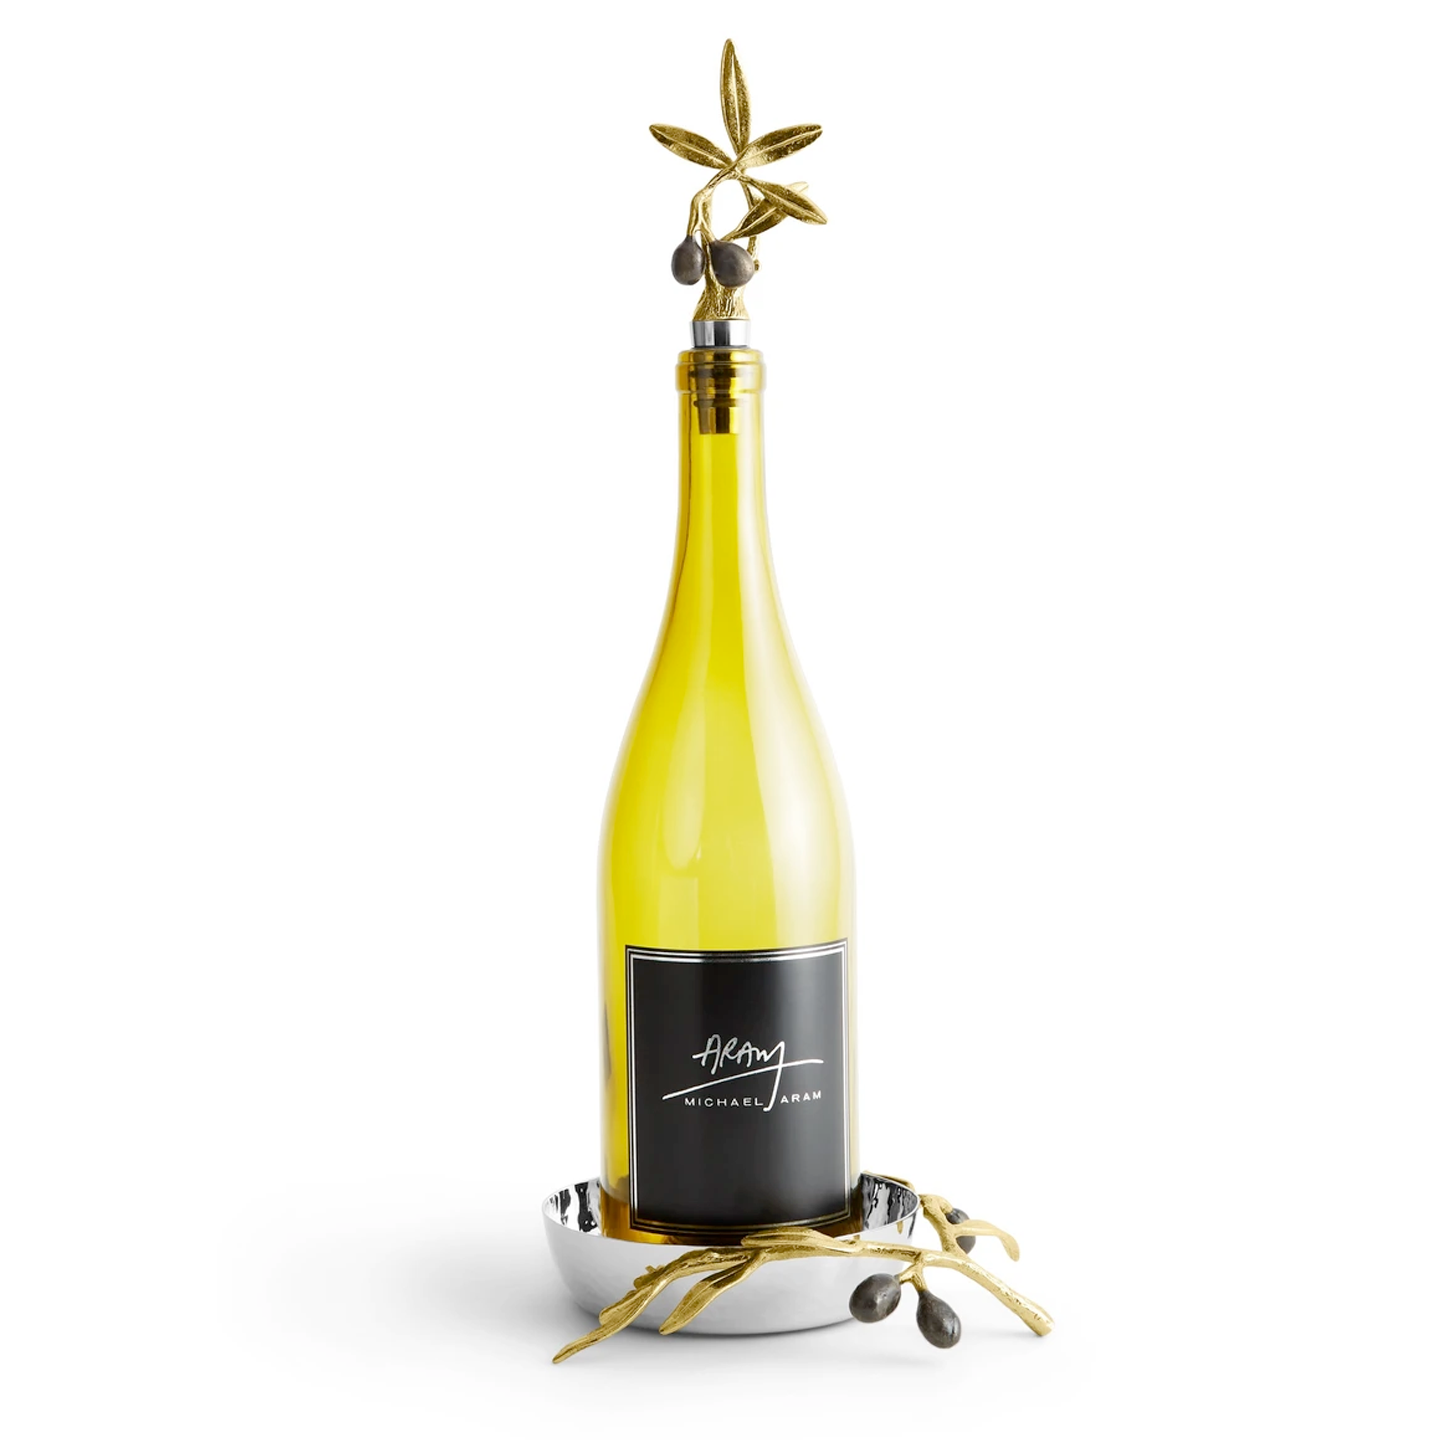 Olive Branch Wine Coaster & Stopper Set, Michael Aram - RSVP Style